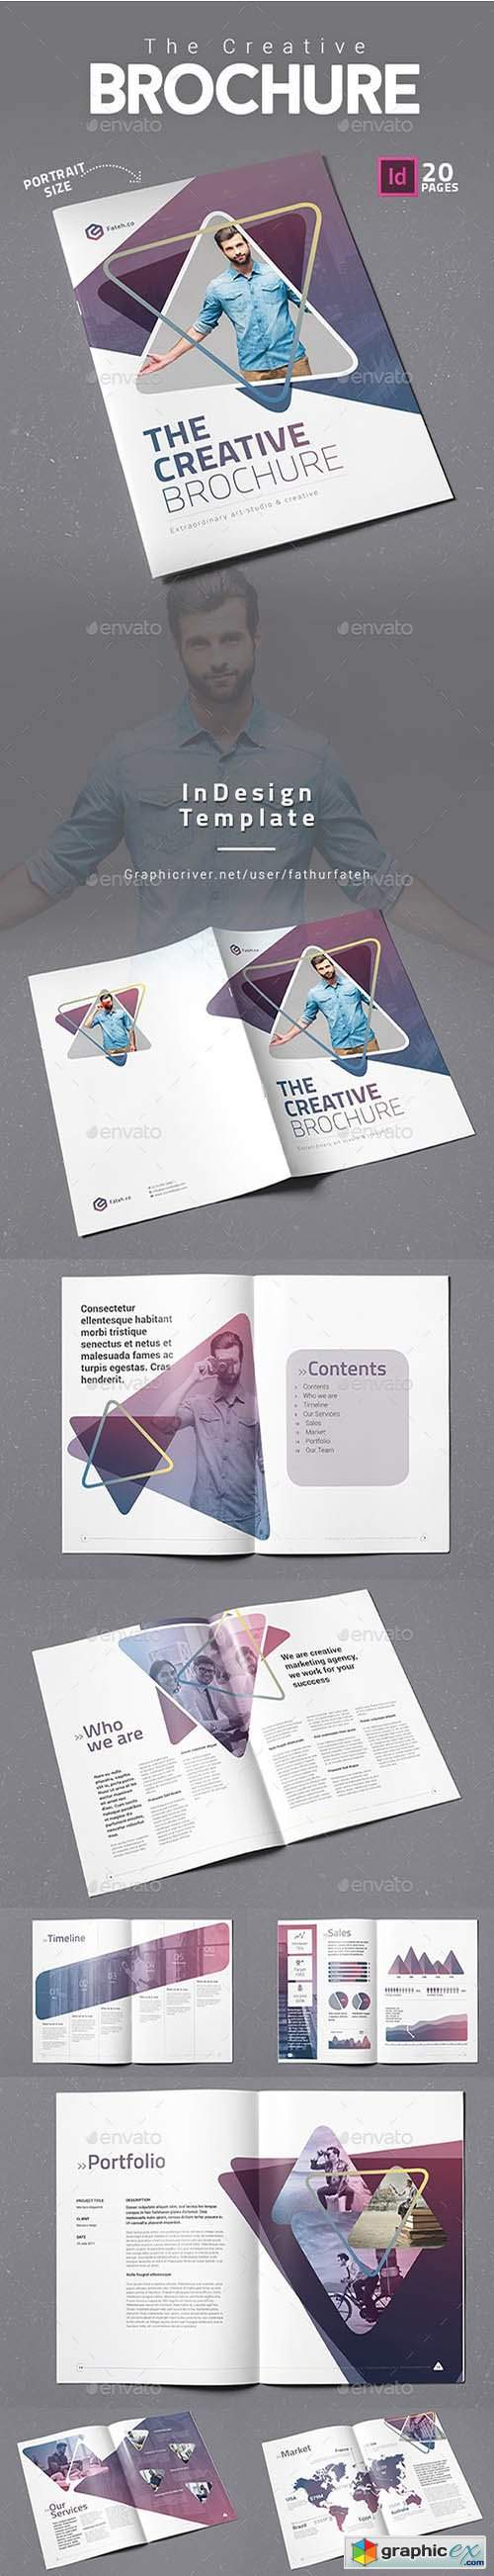 The Creative Brochure Vol.4